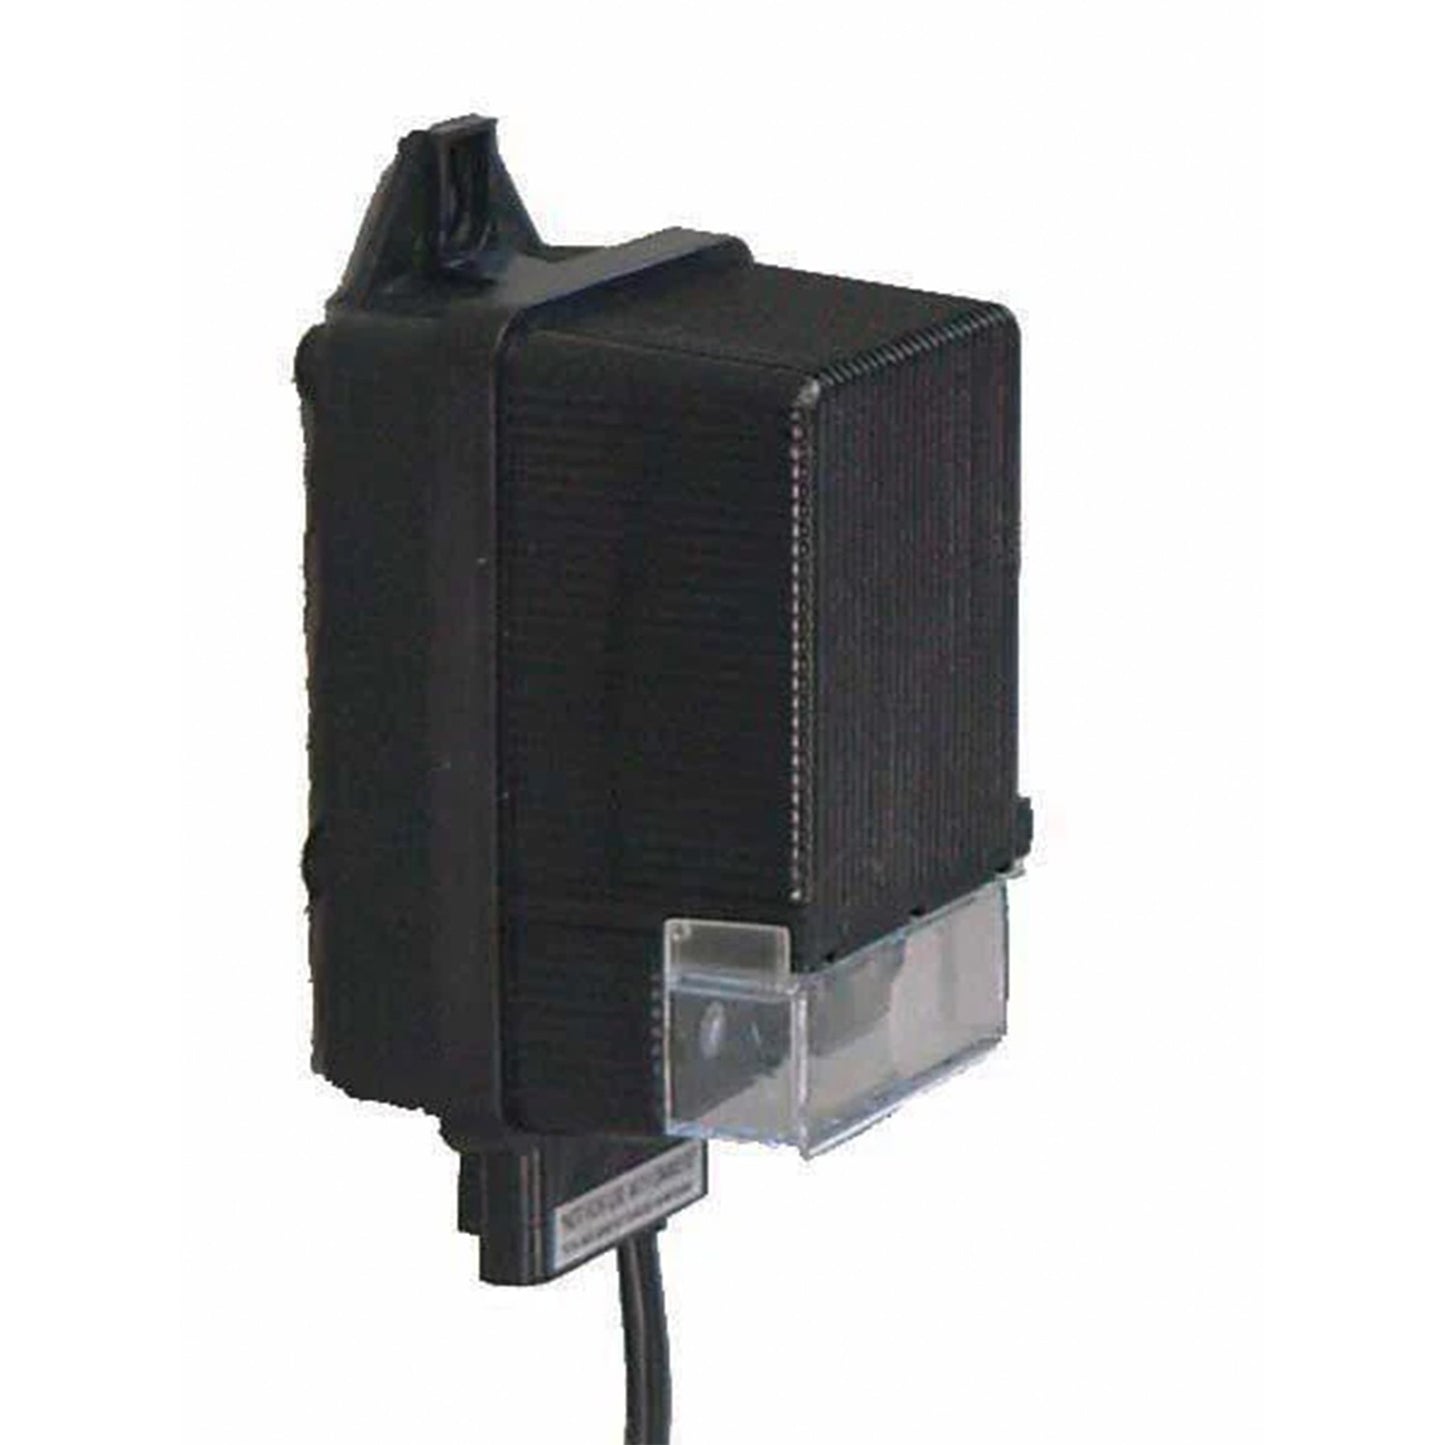 150 Watt Transformer with Photoeye and timer - 120 V to 12 V